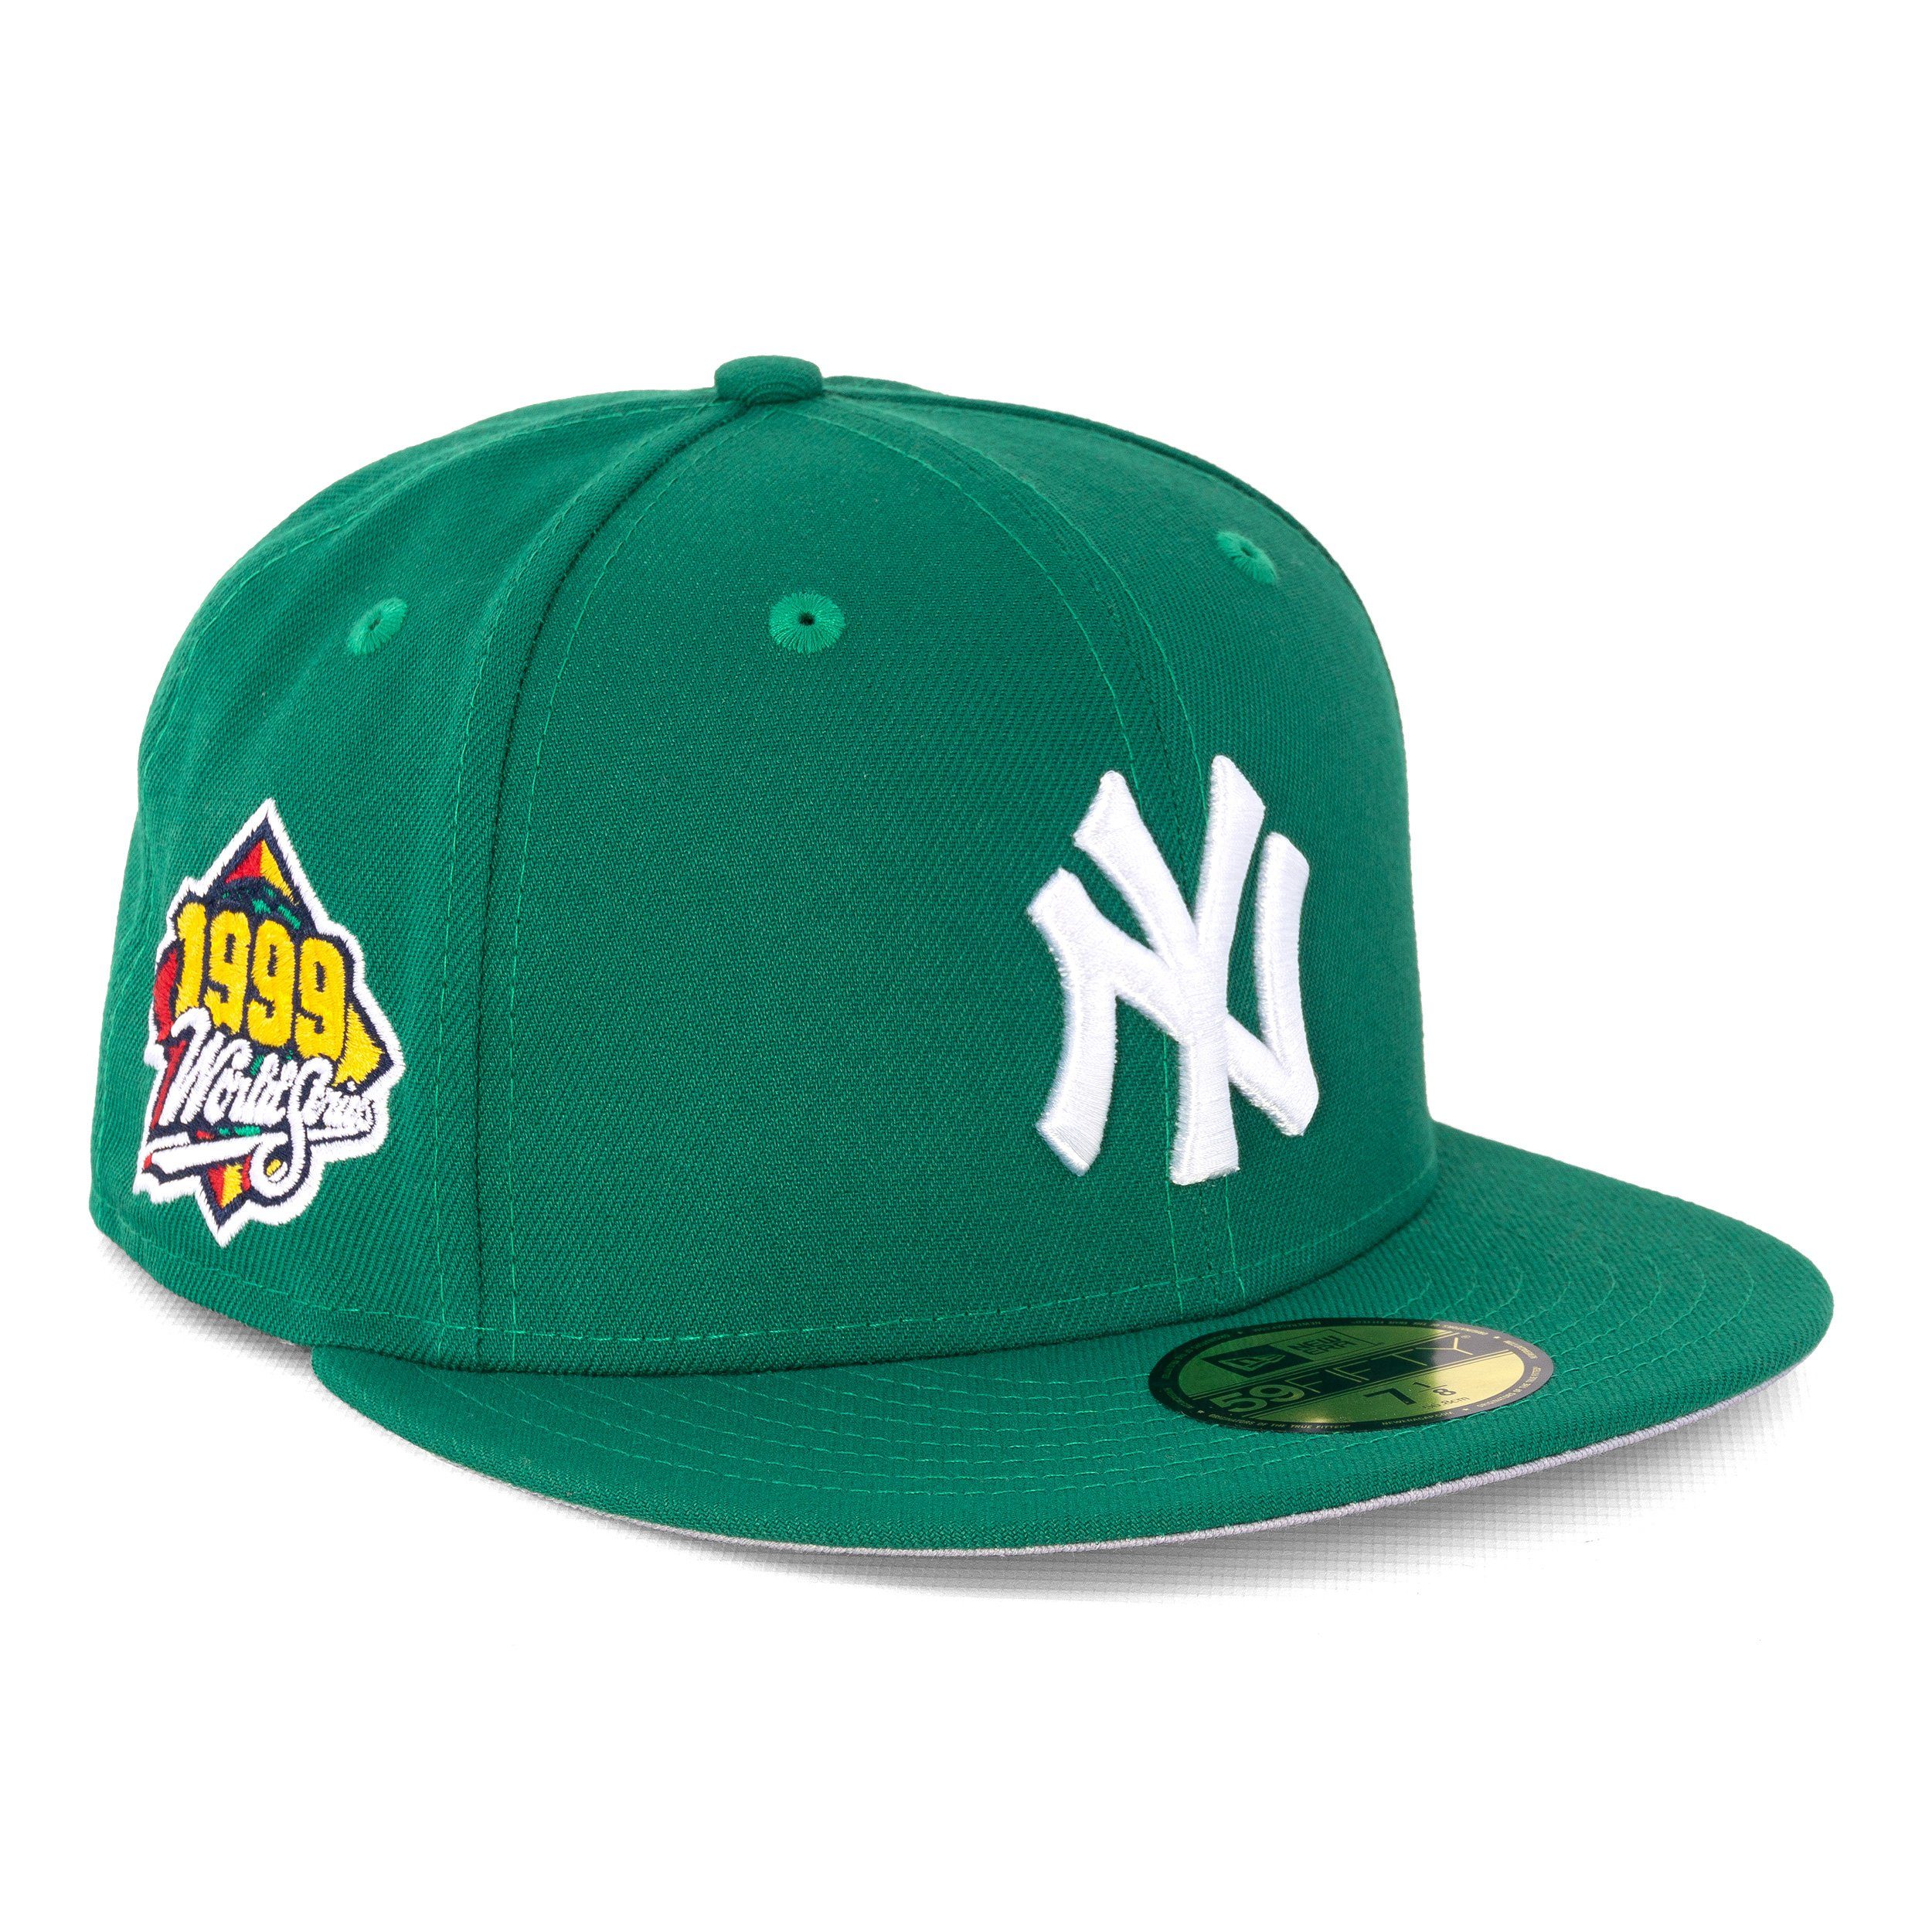 New Era Baseball Cap Cap New Era 59 Fifty New York Yankees 1999 WS (1-St)